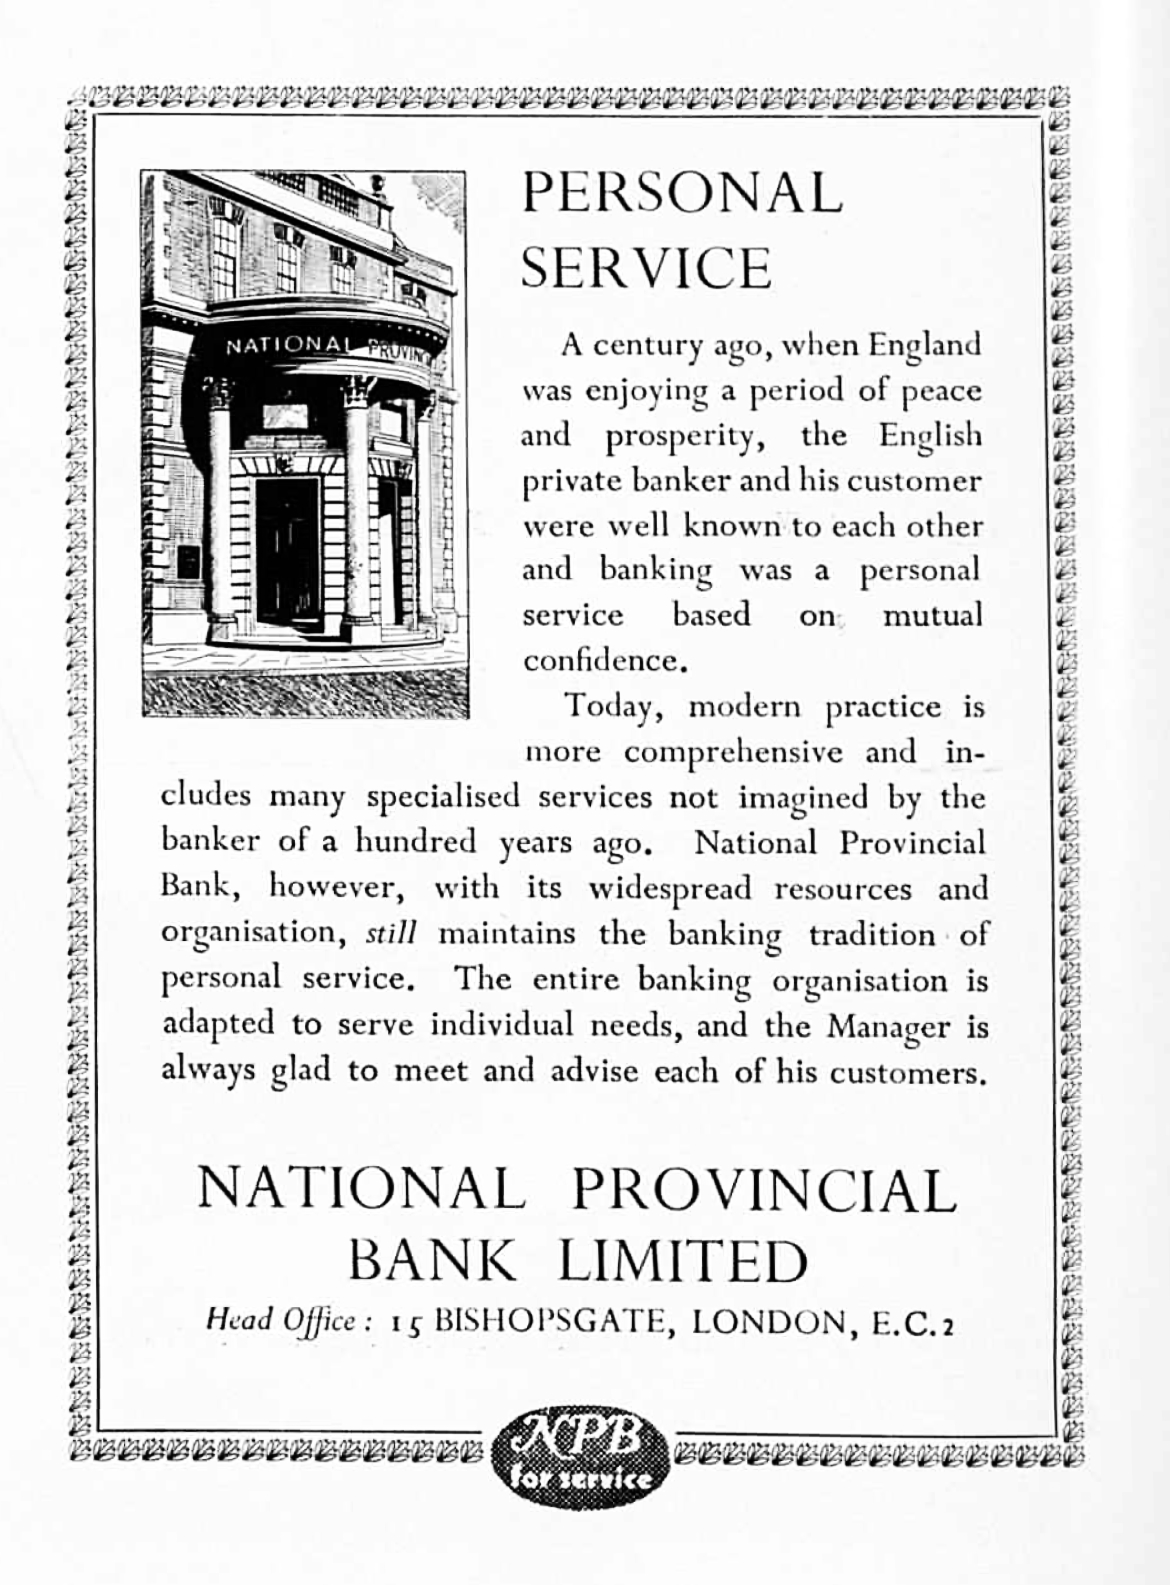 National Provincial Bank